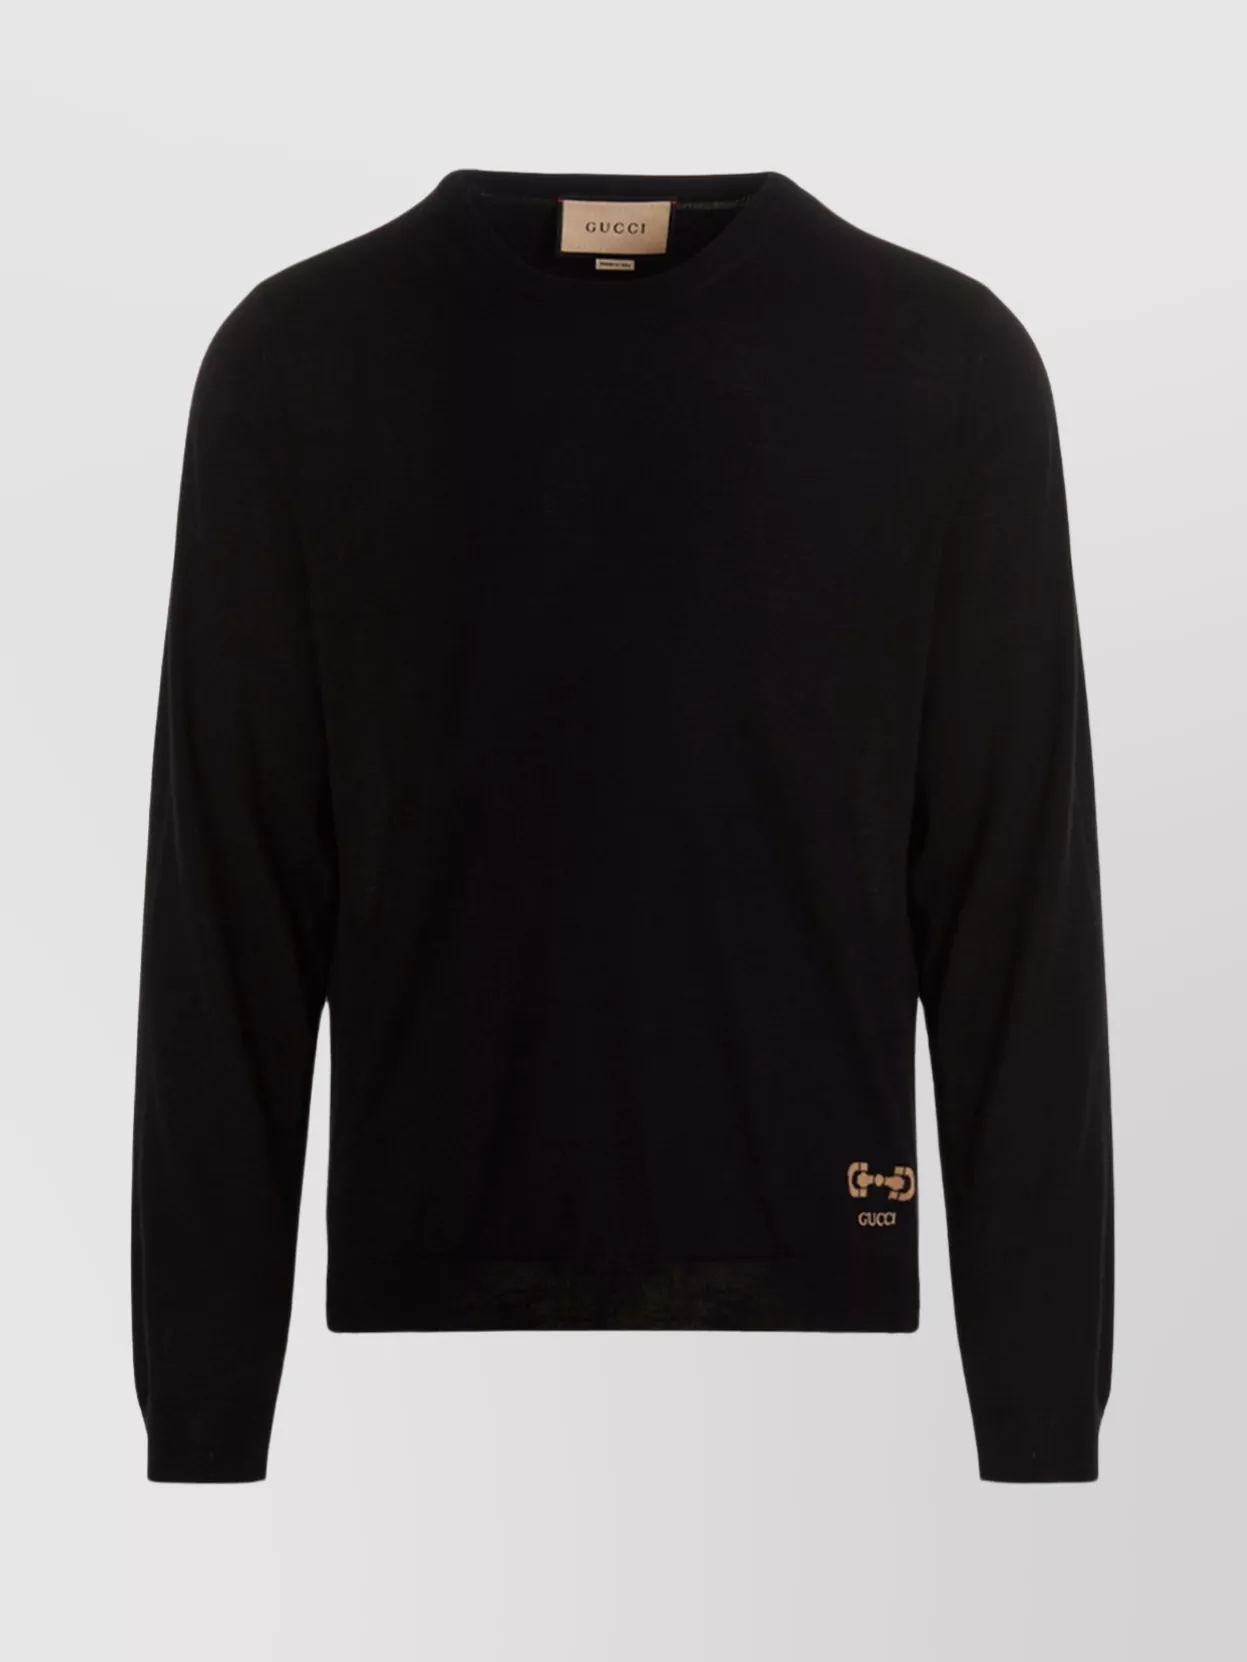 Gucci Wool Horsebit Sweater In Black